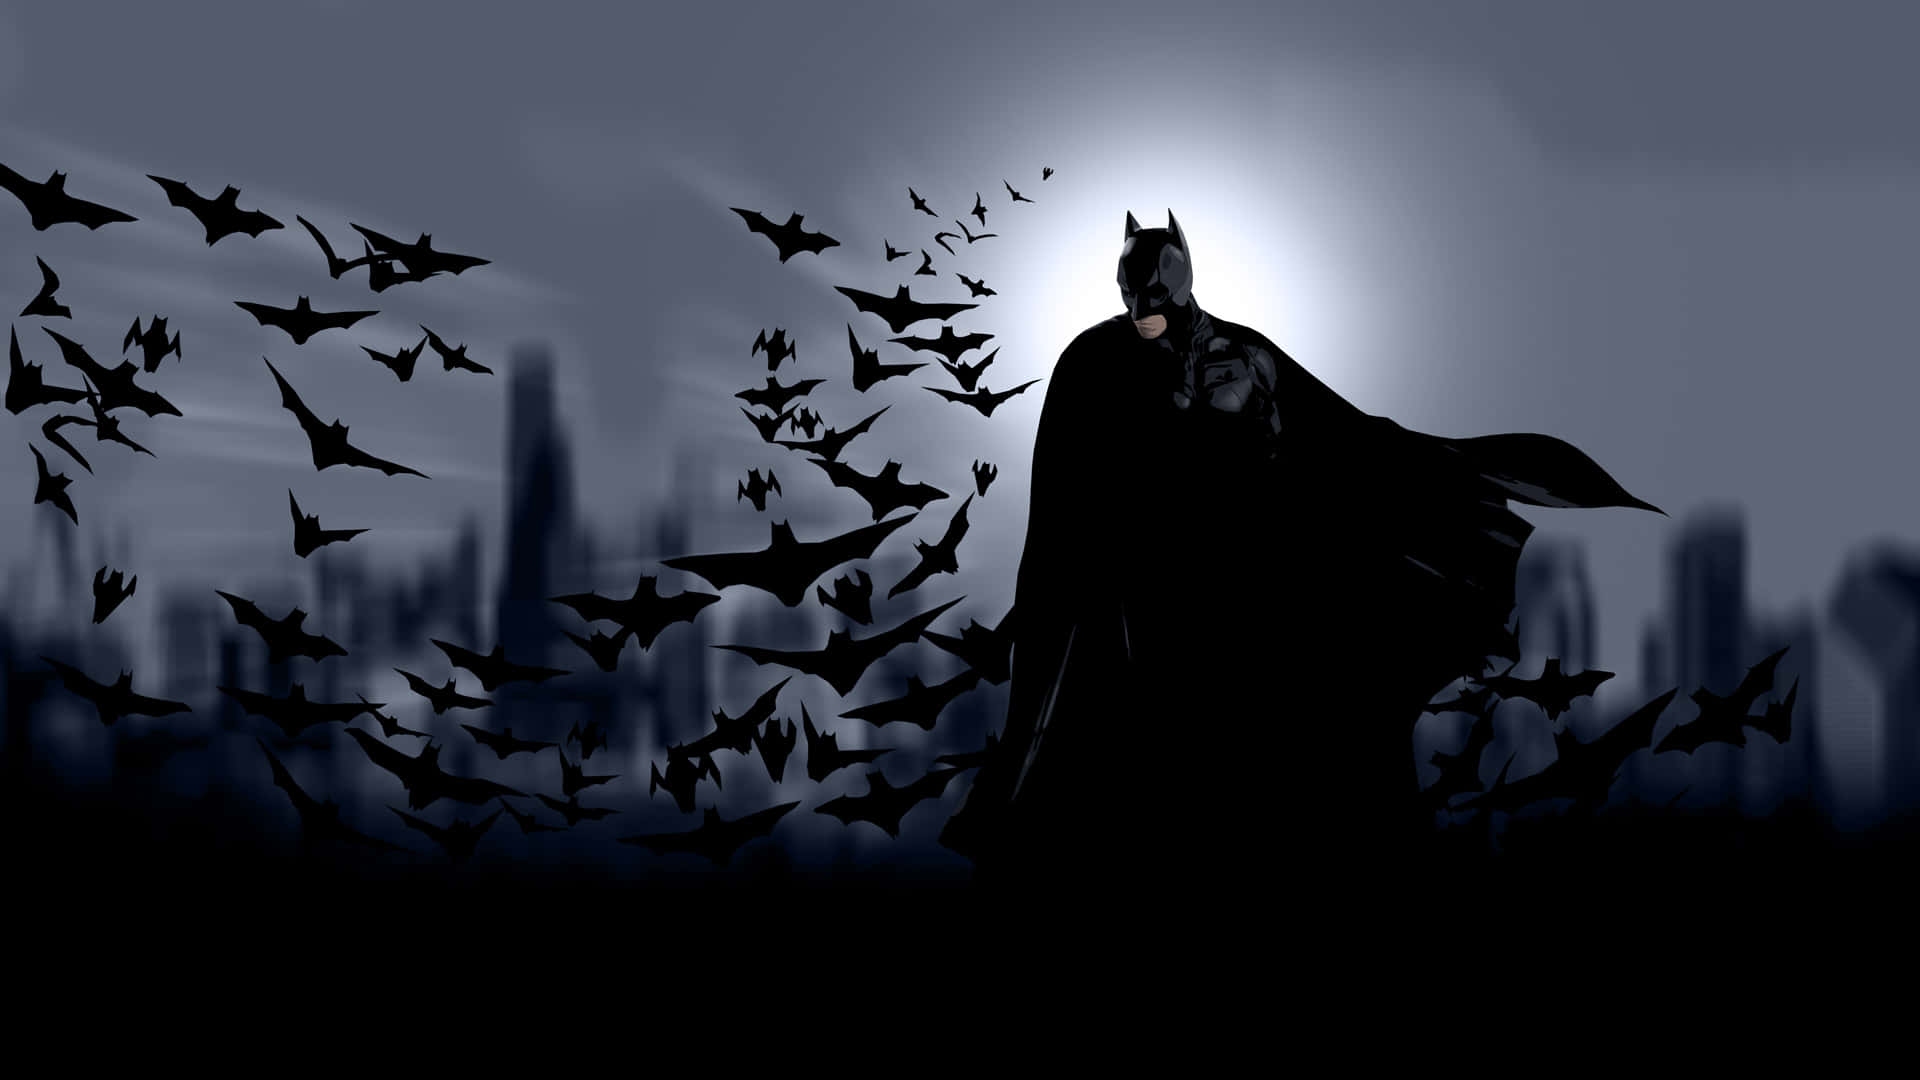 1. Legendary​ Superhero Cool Batman Coming To The Rescue